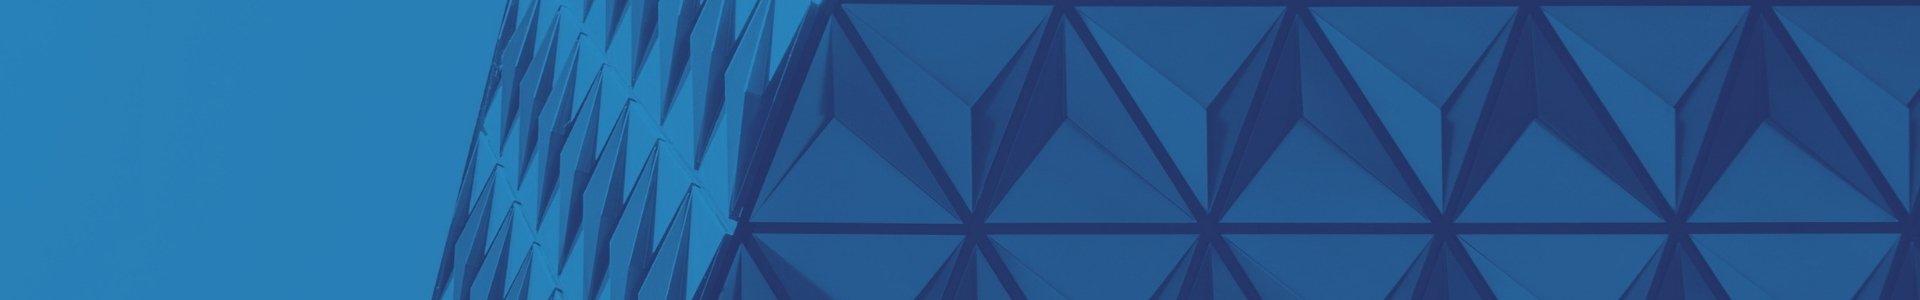 Teal blue geometric triangles